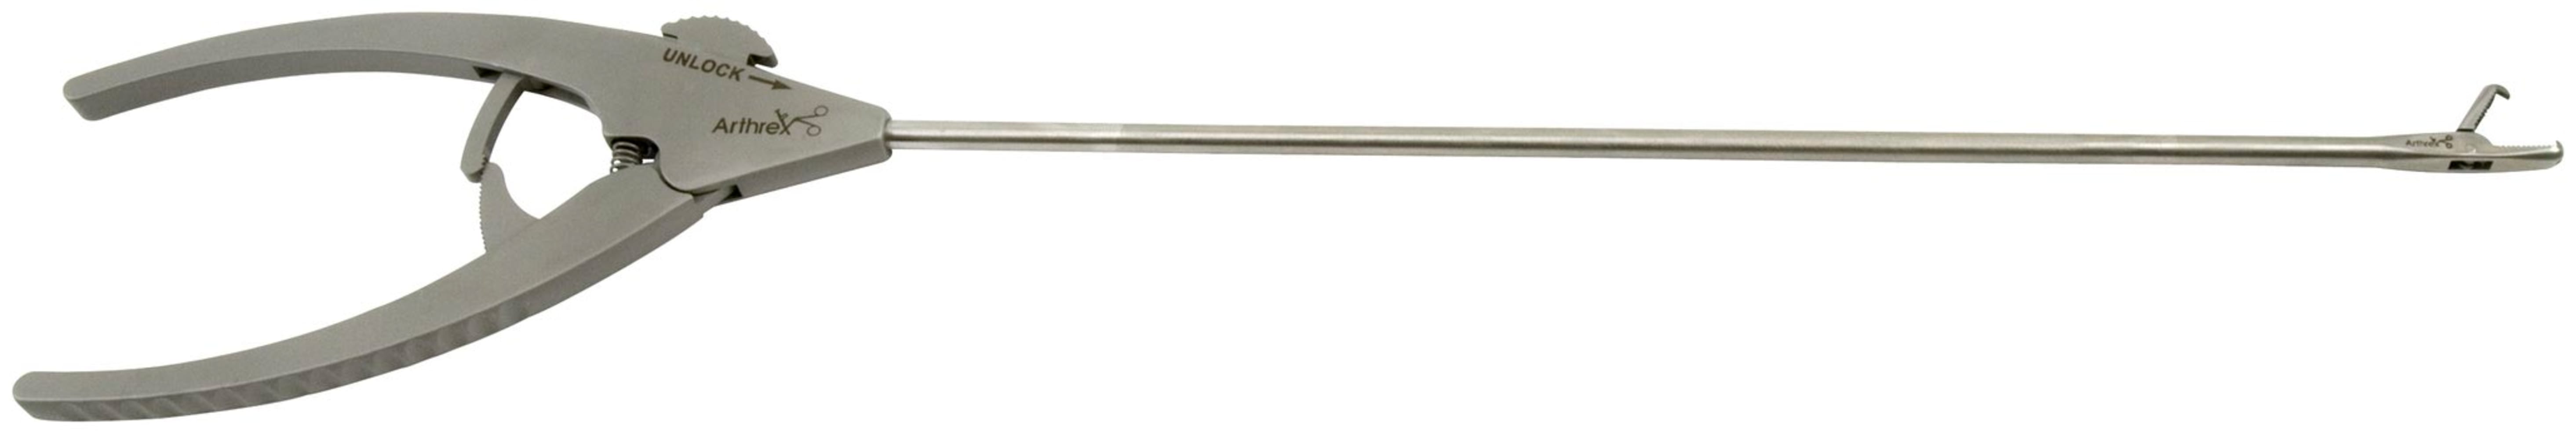 Grasper, Alligator Hook Tip, ø4.2 mm, Straight Shaft, with WishBone Handle